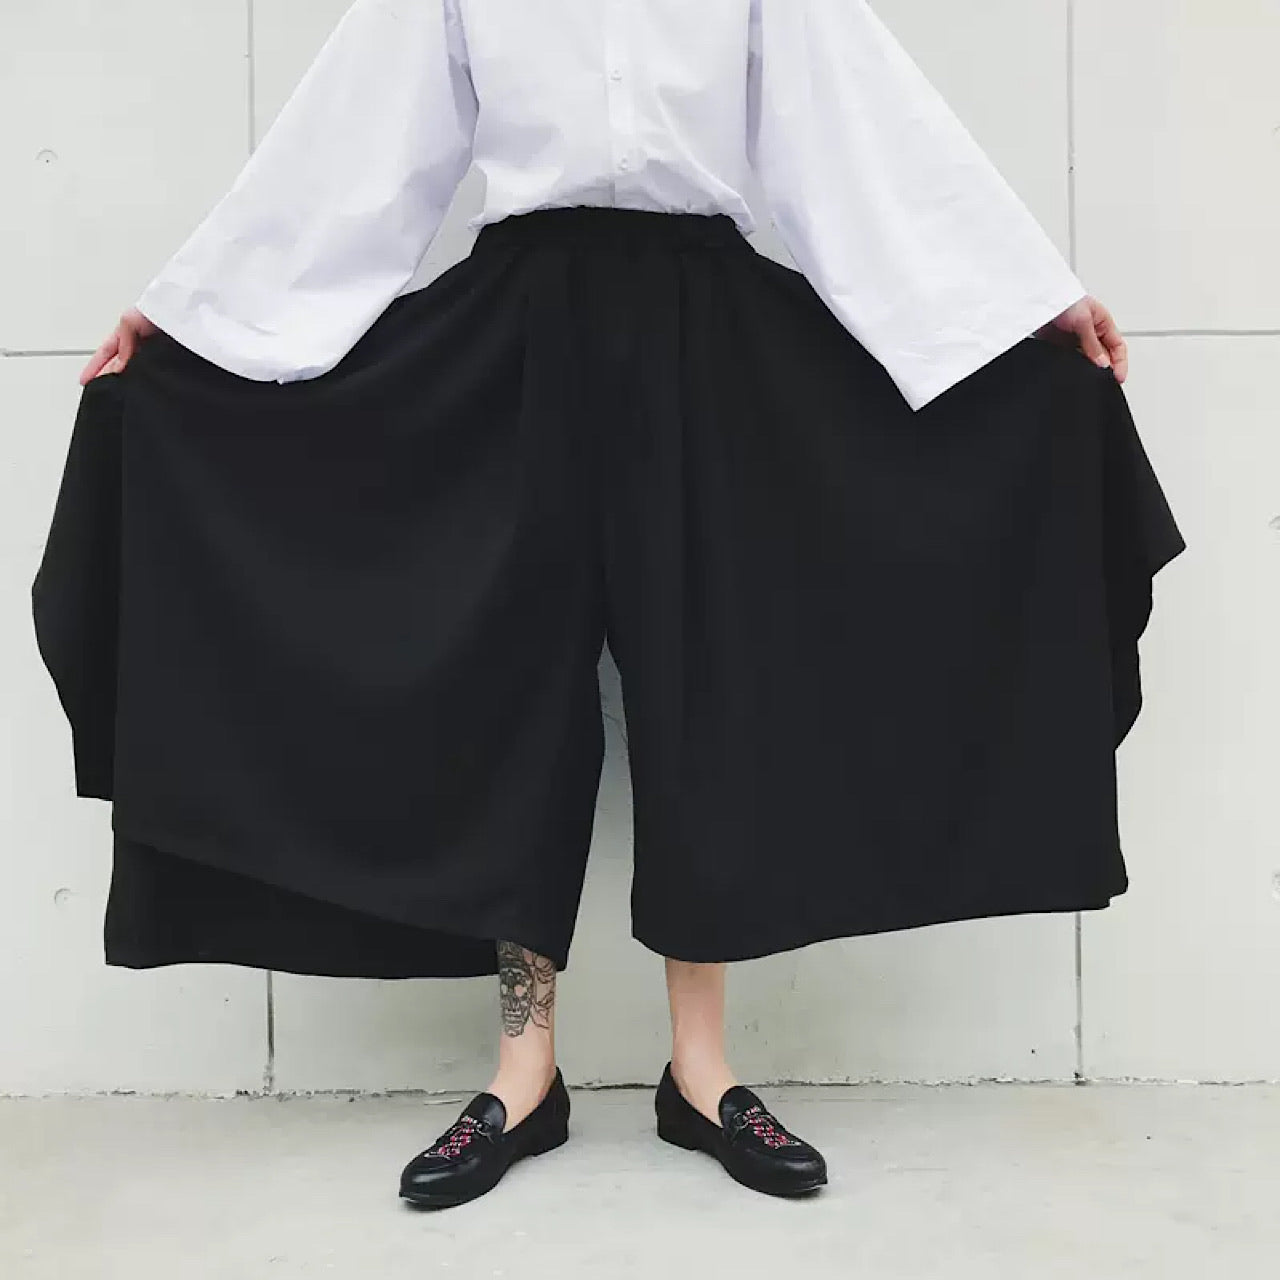 skirt silhouette pants  US1562